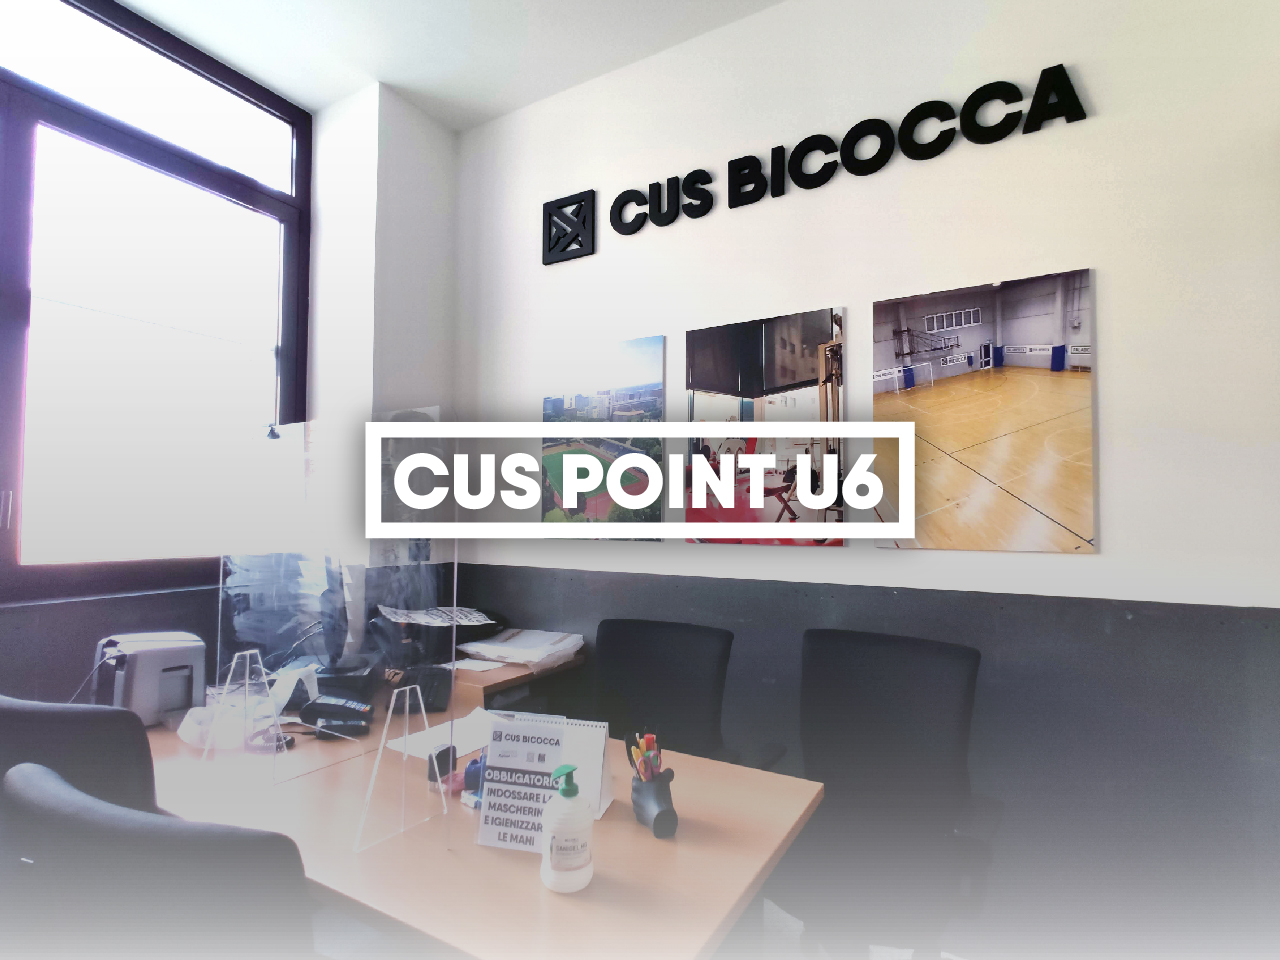 CUS Point U6 • CUS Bicocca